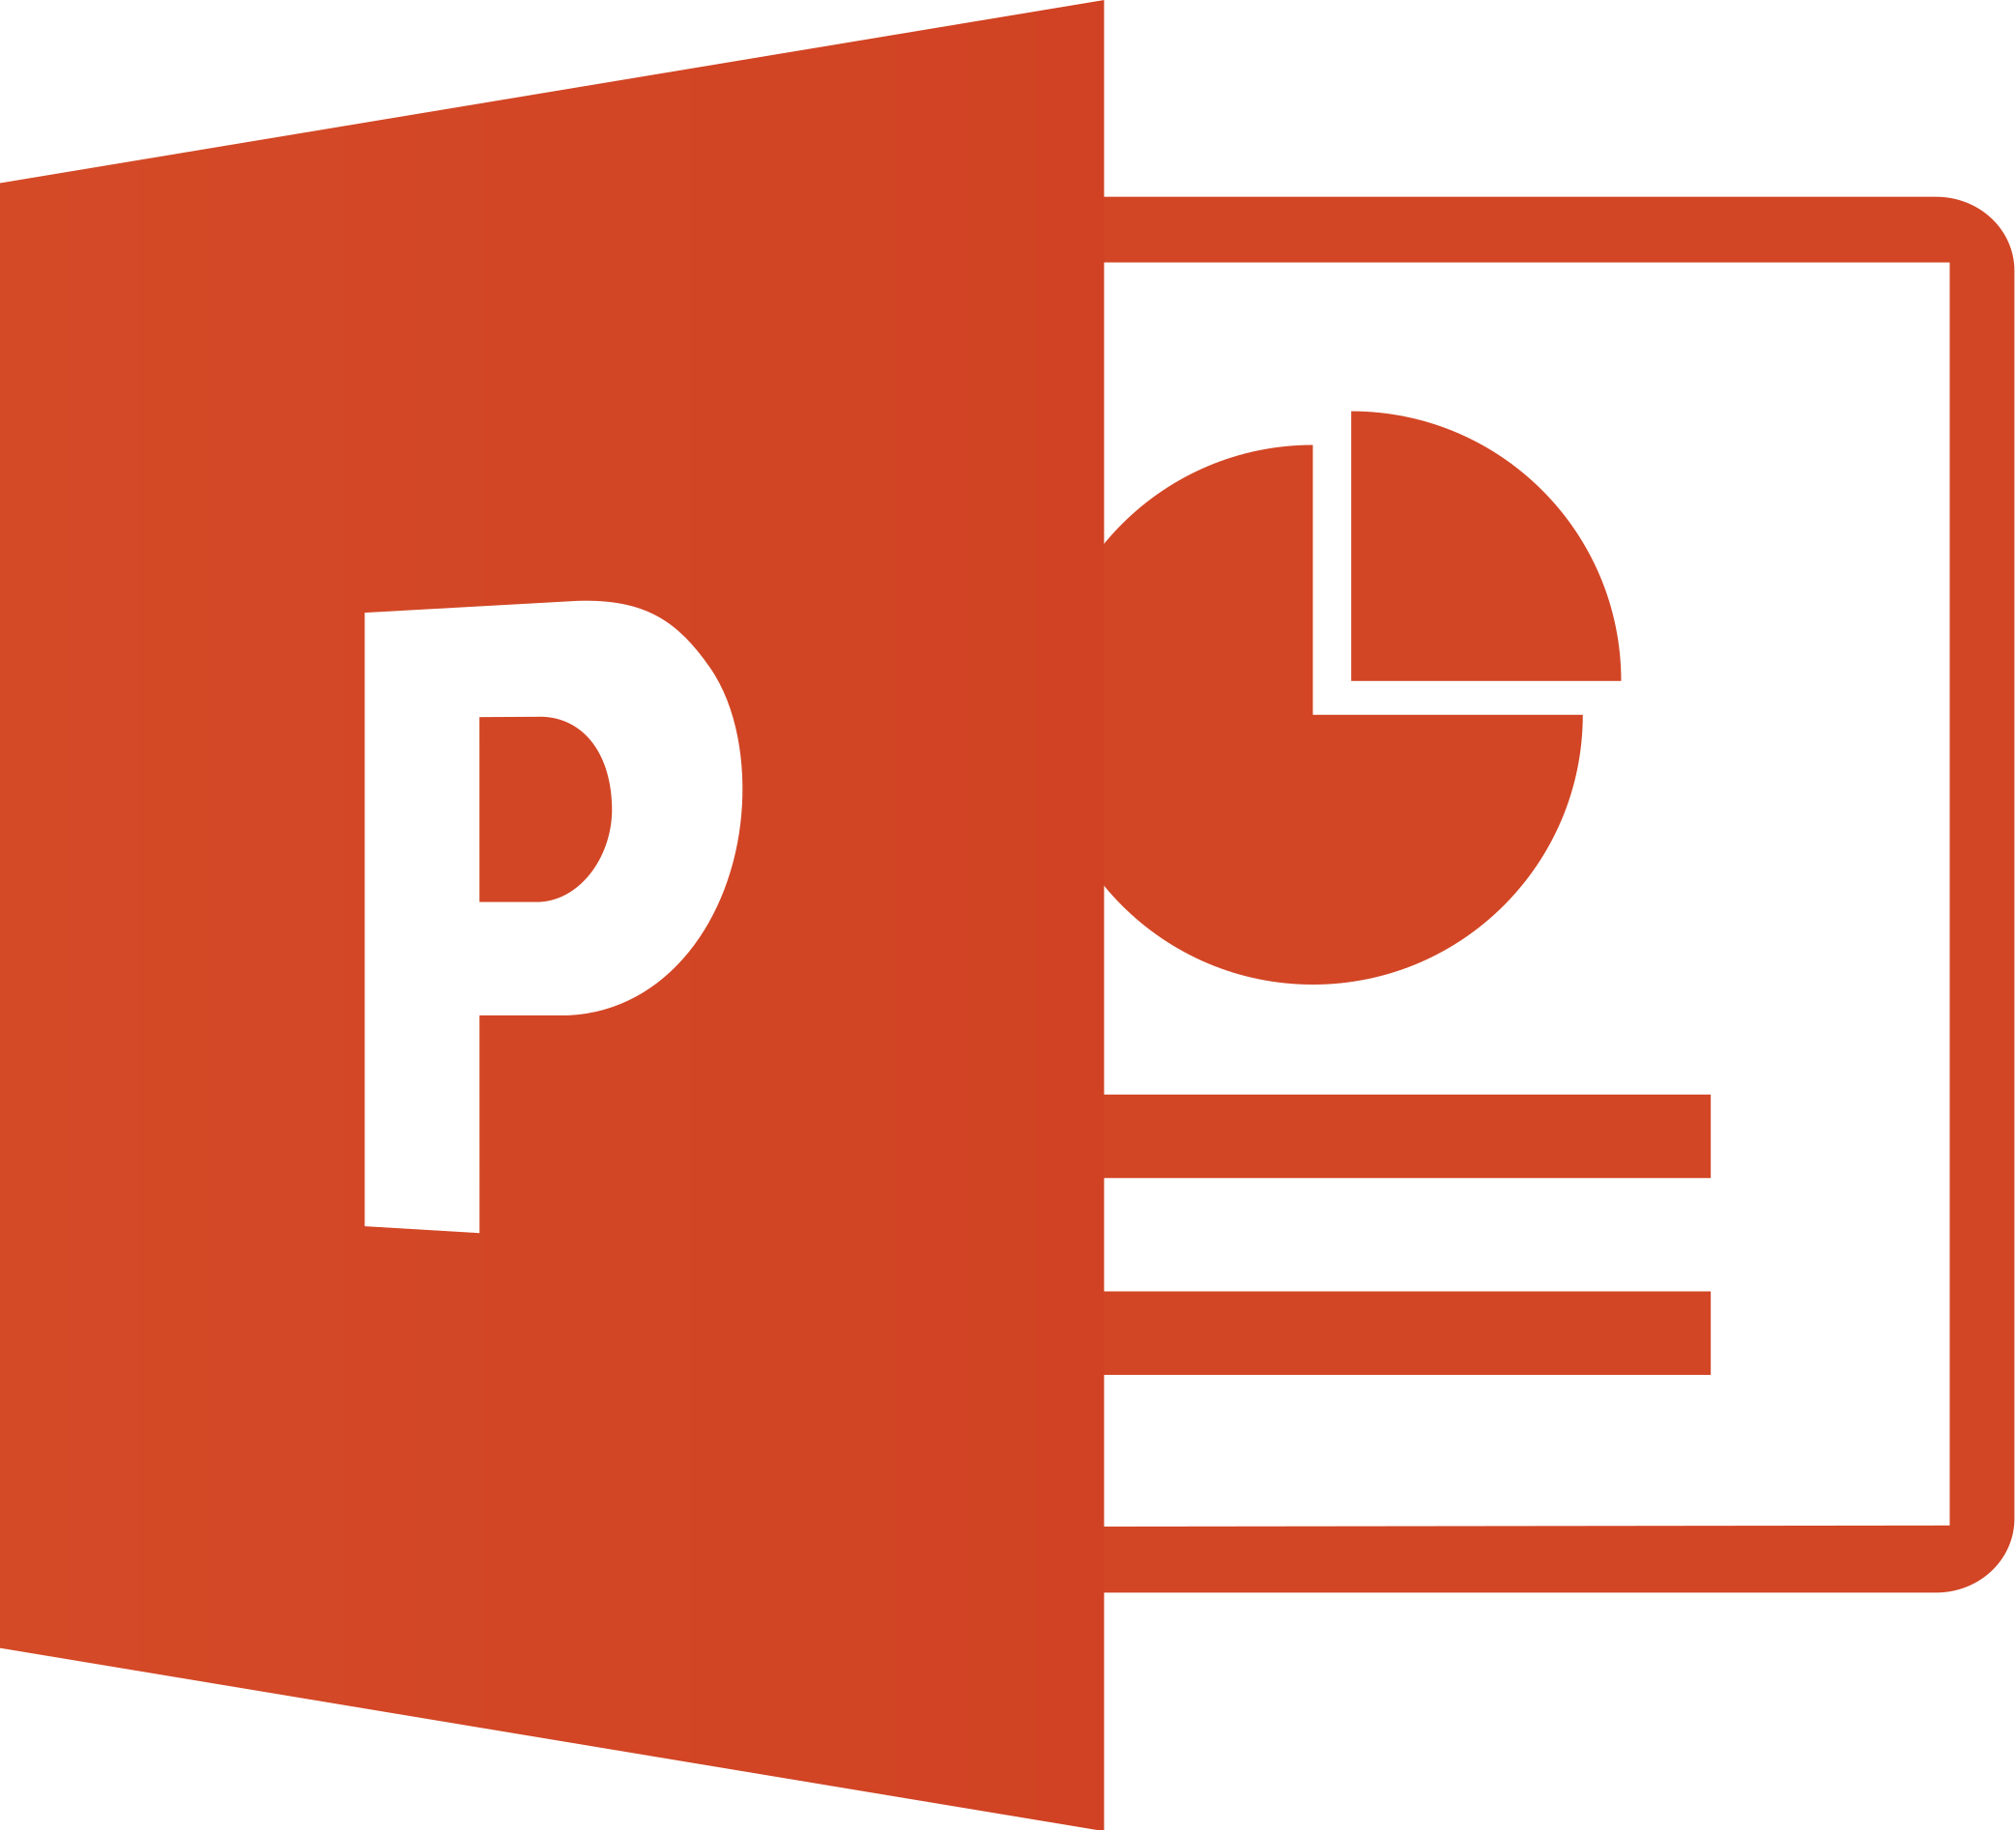 https://upload.wikimedia.org/wikipedia/commons/thumb/1/16/Microsoft_PowerPoint_2013-2019_logo.svg/2086px-Microsoft_PowerPoint_2013-2019_logo.svg.png